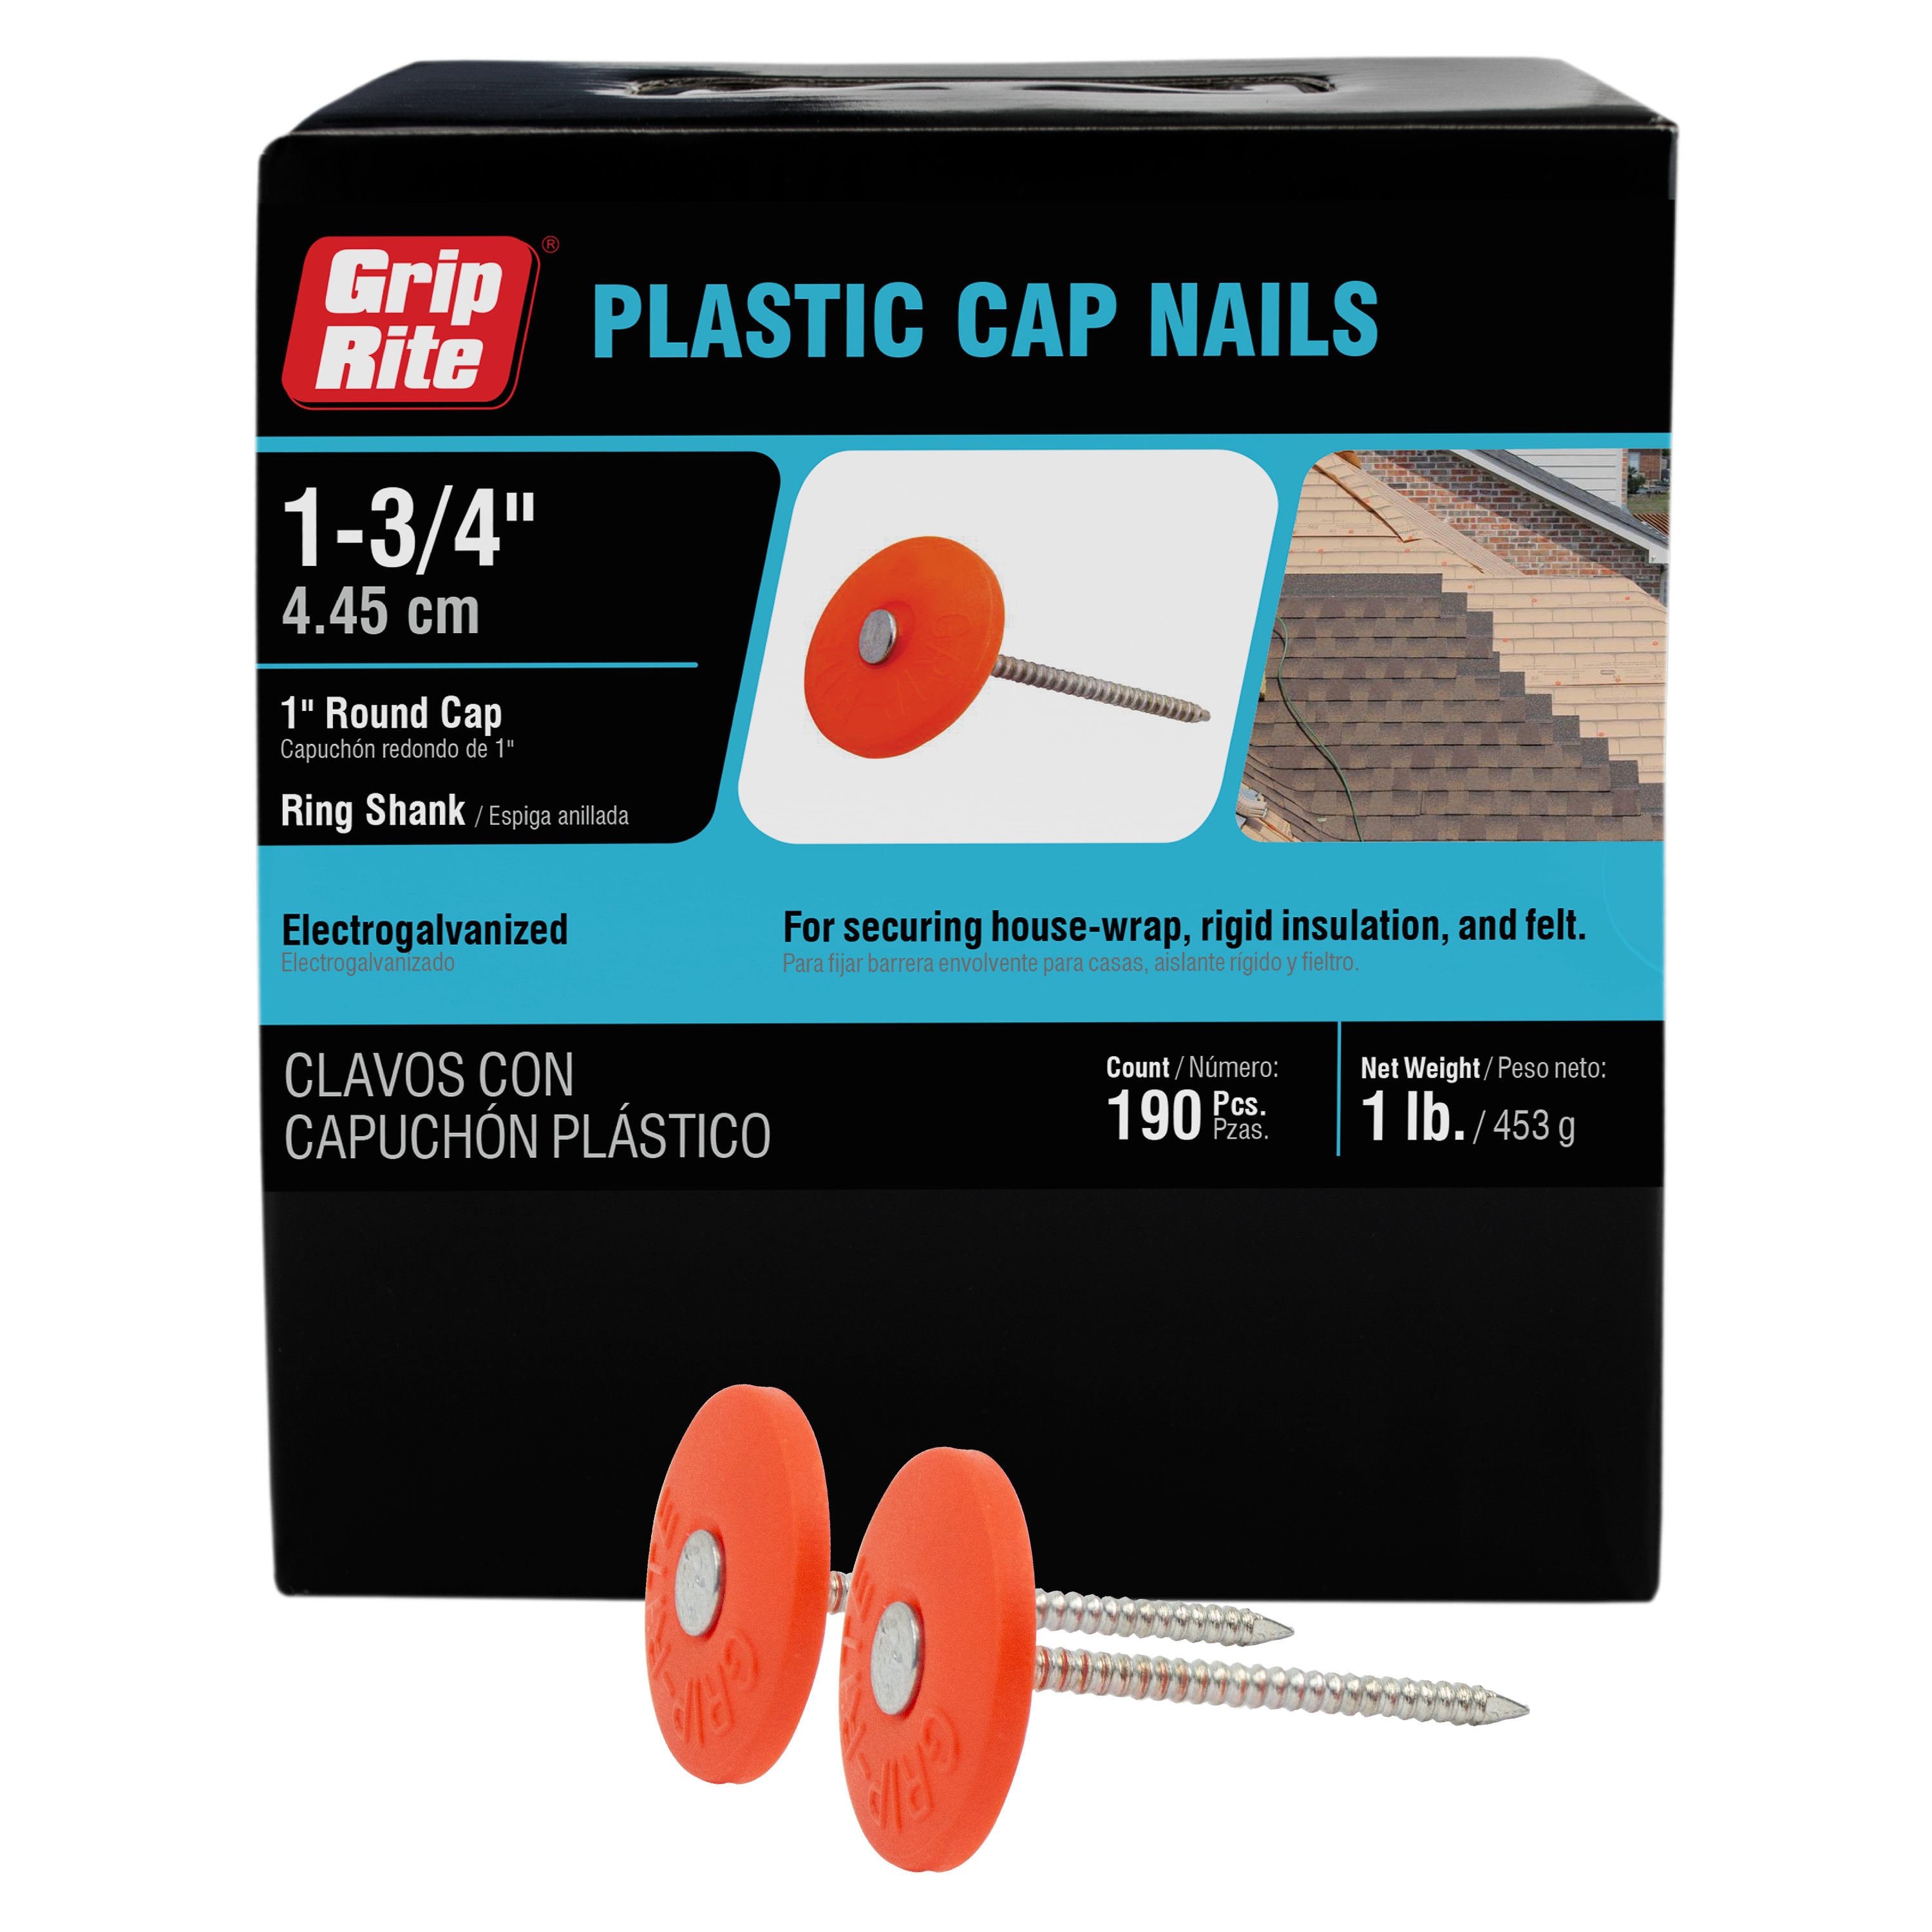 500pc 1-3/4" Galvanized Ring Shank Plastic Cap Nails free shipping #159798 3lb 